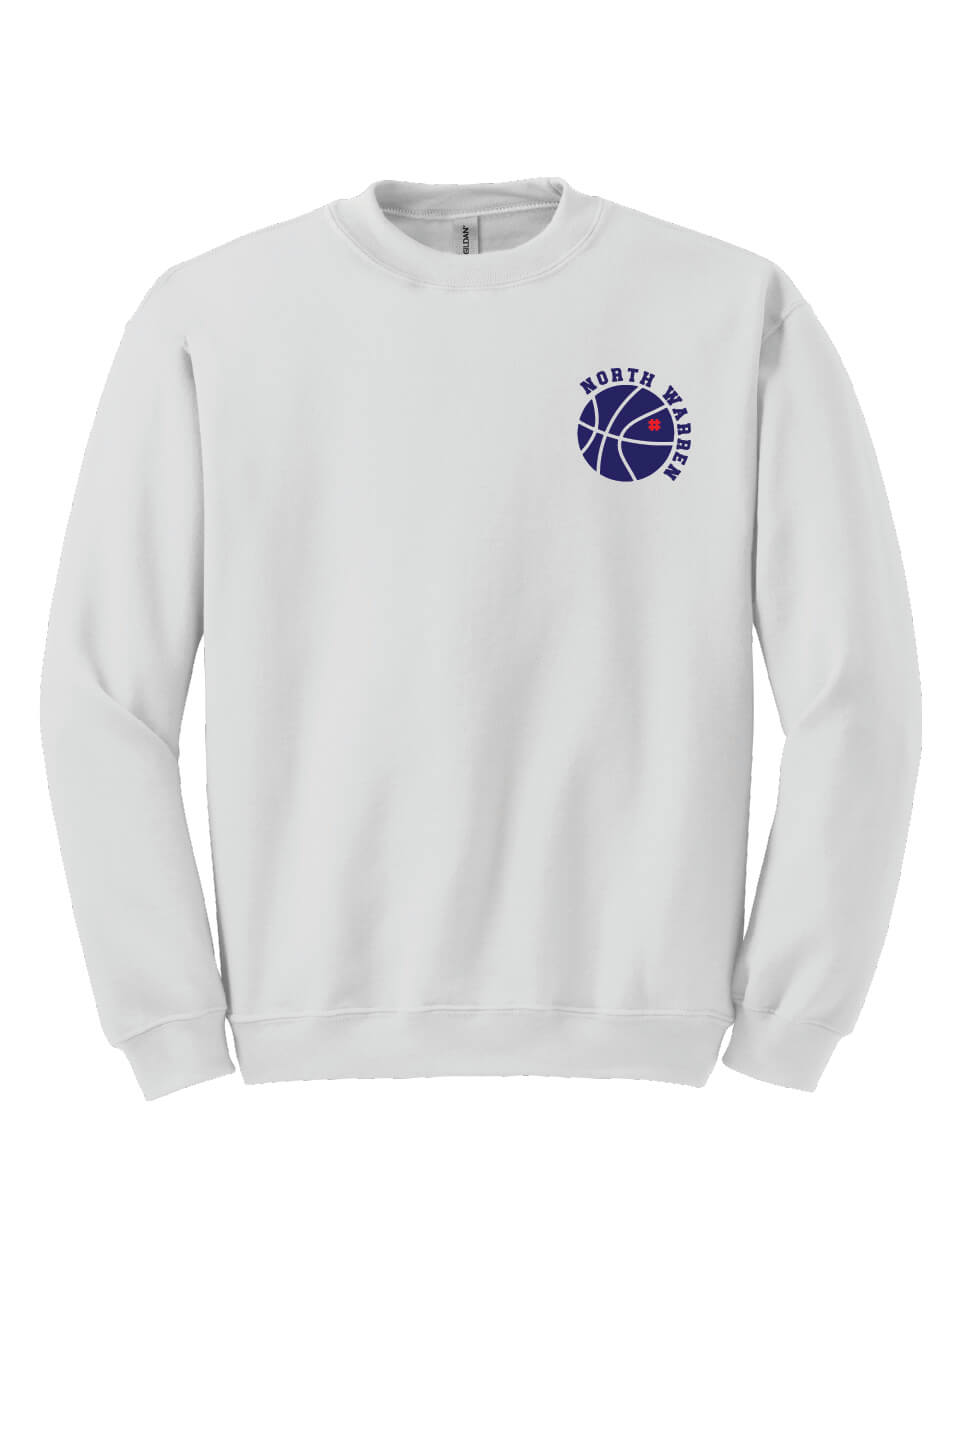 North Warren Basketball Crewneck Sweatshirt (Youth) white, front